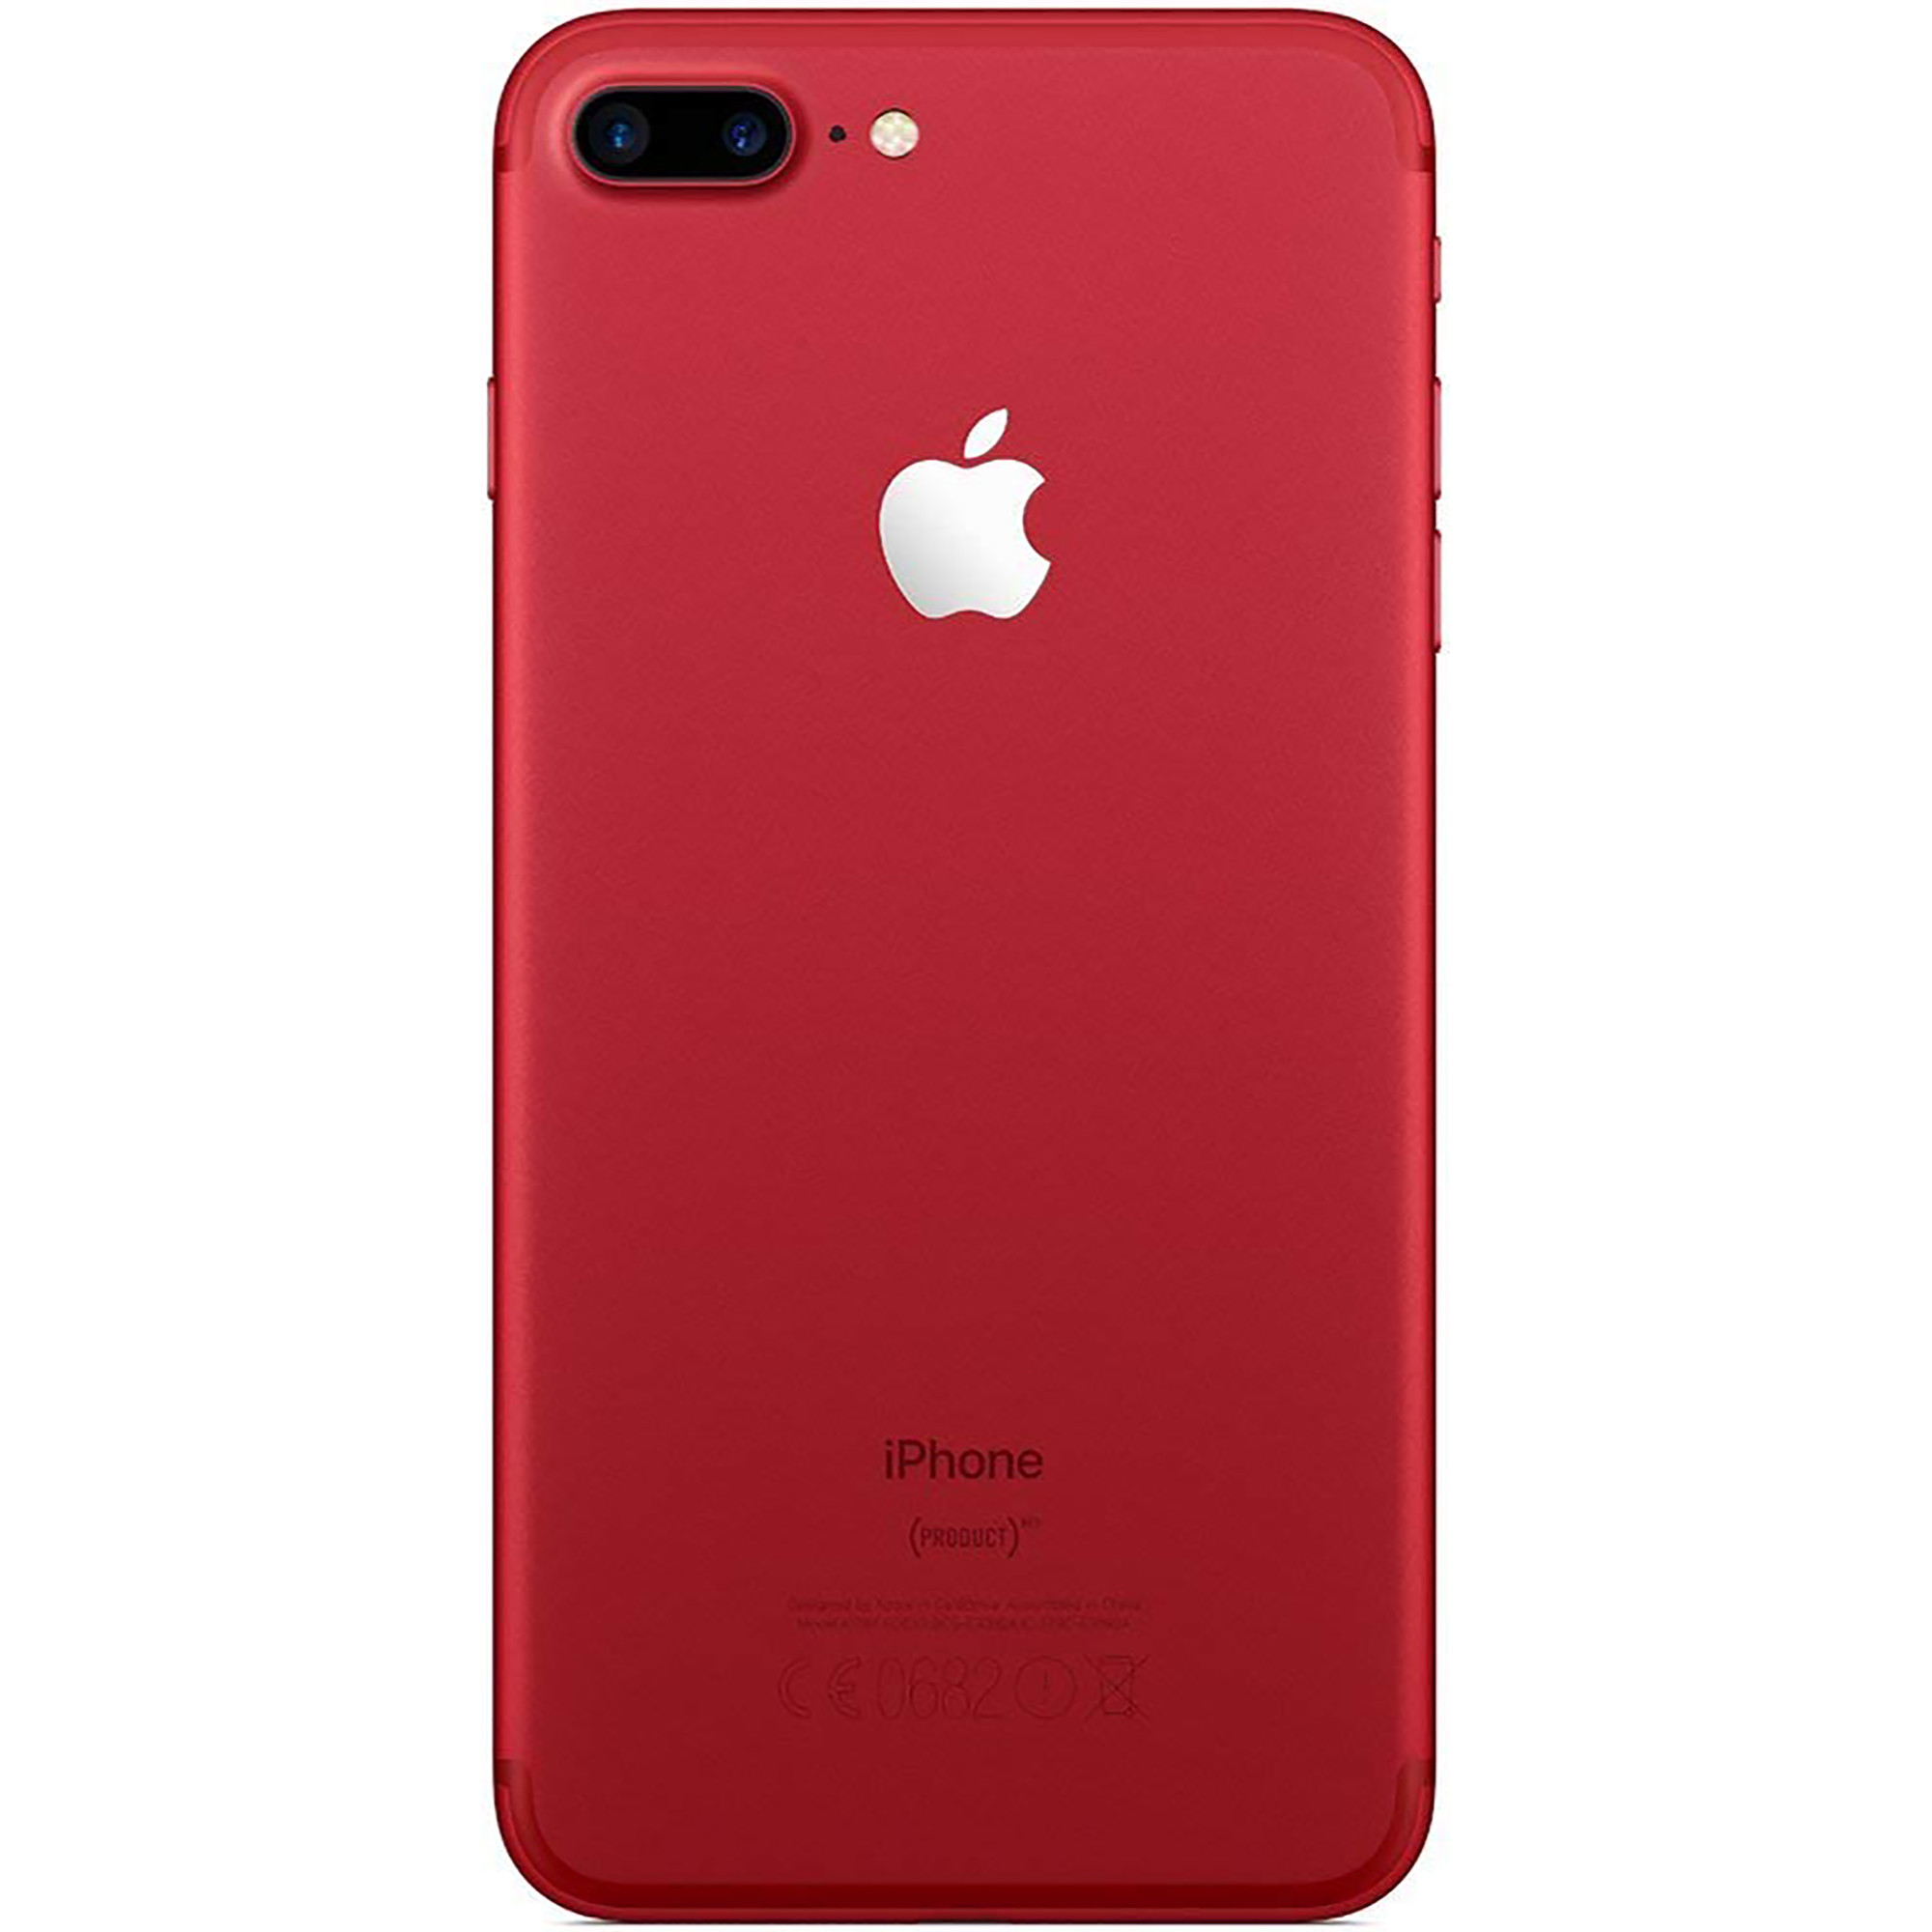 Restored Apple iPhone 7 PLUS 256GB Unlocked (GSM, not CDMA), RED (Refurbished) - image 2 of 4